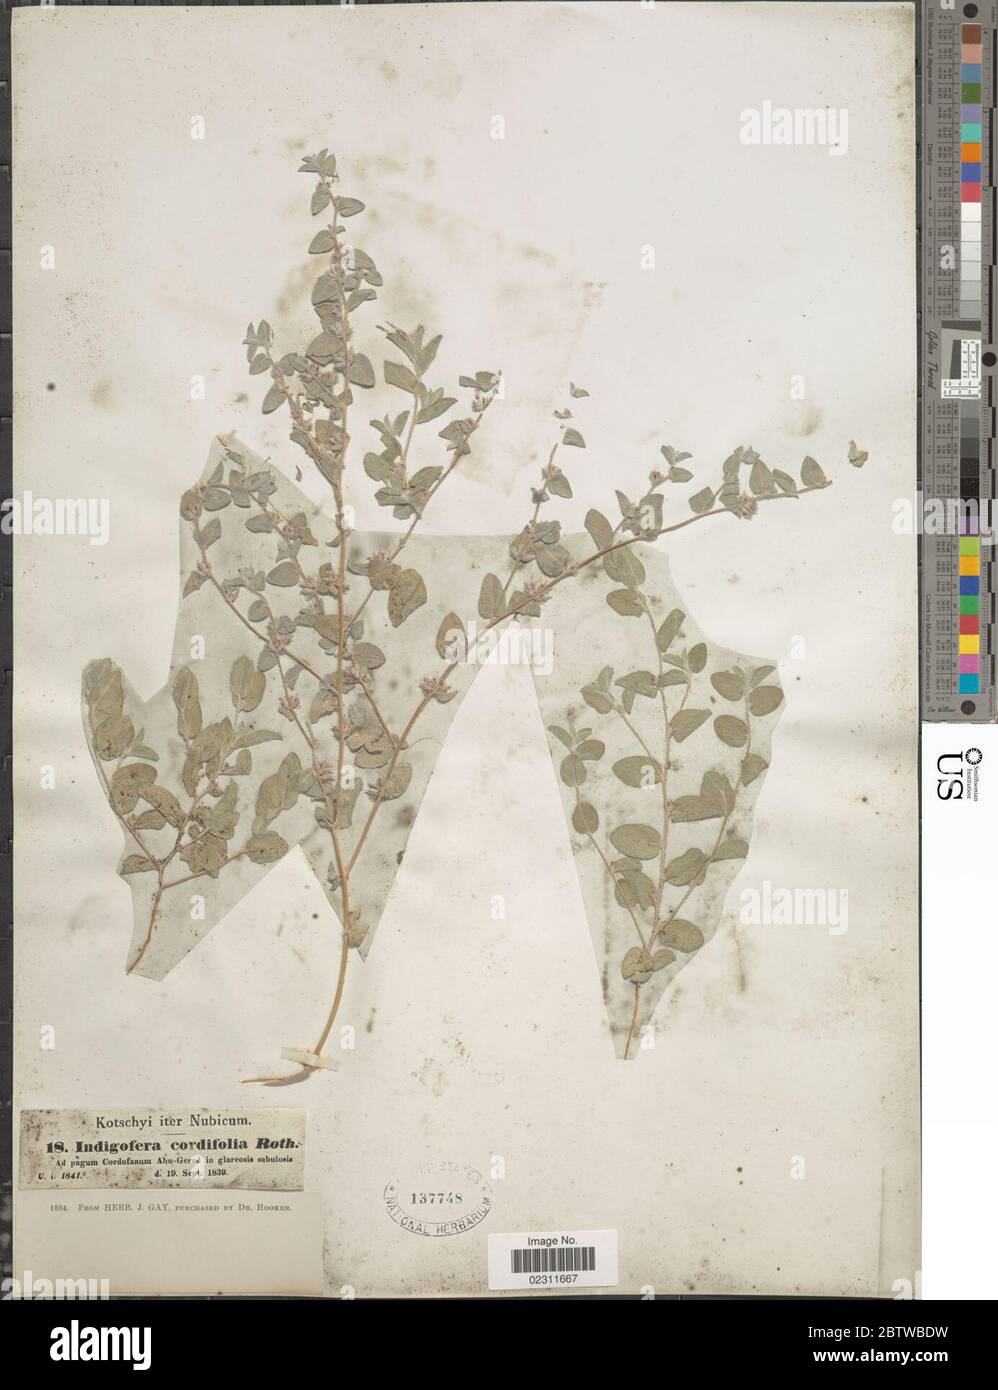 Indigofera cordifolia Roth. Stock Photo